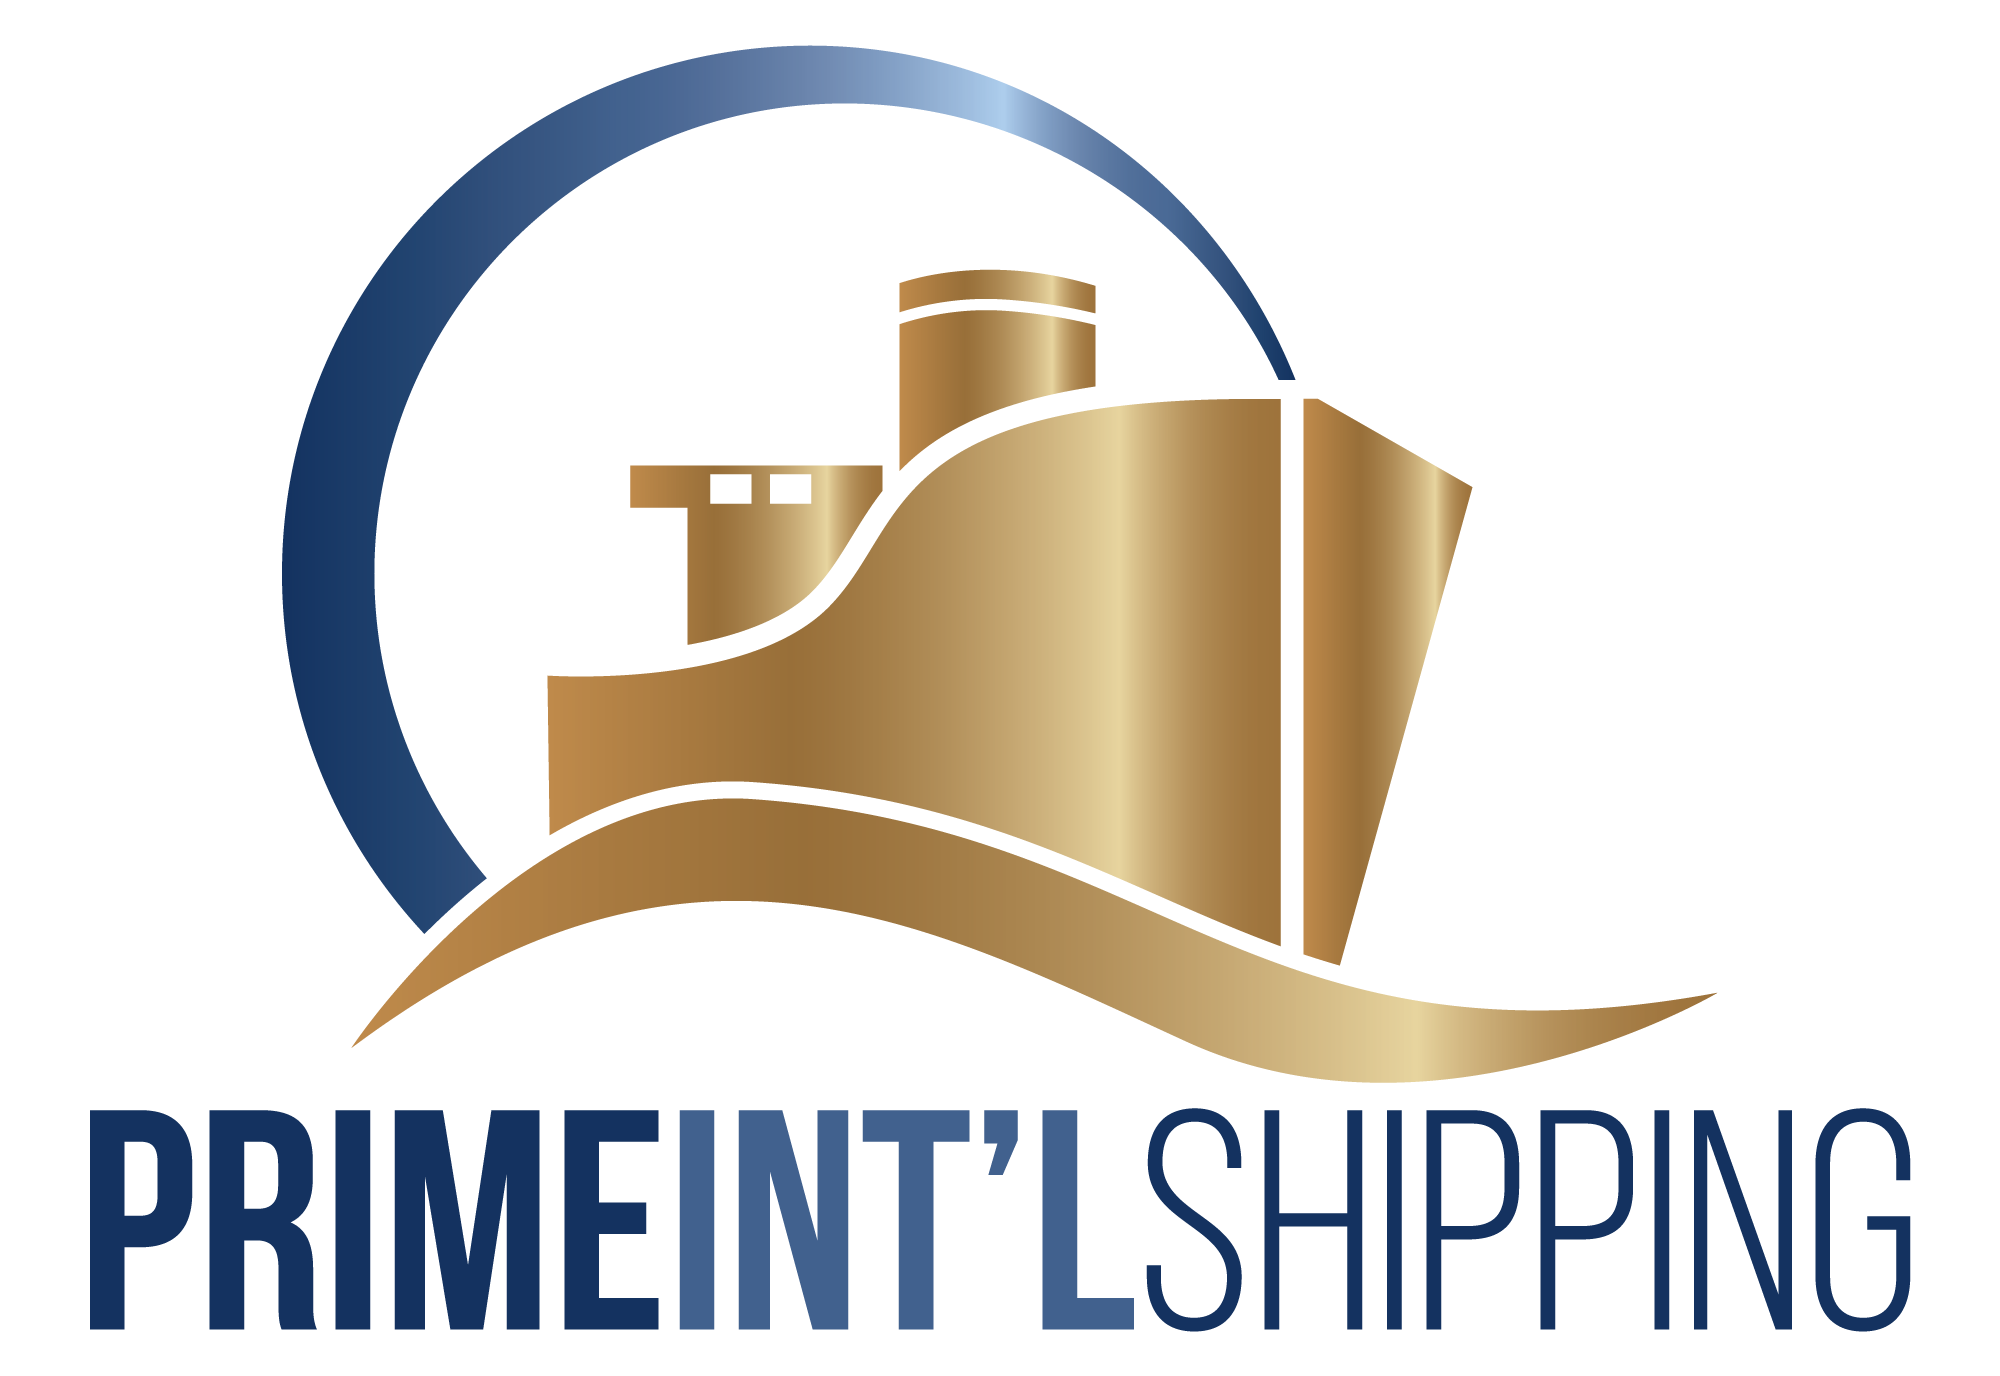 Prime Shipping LLC